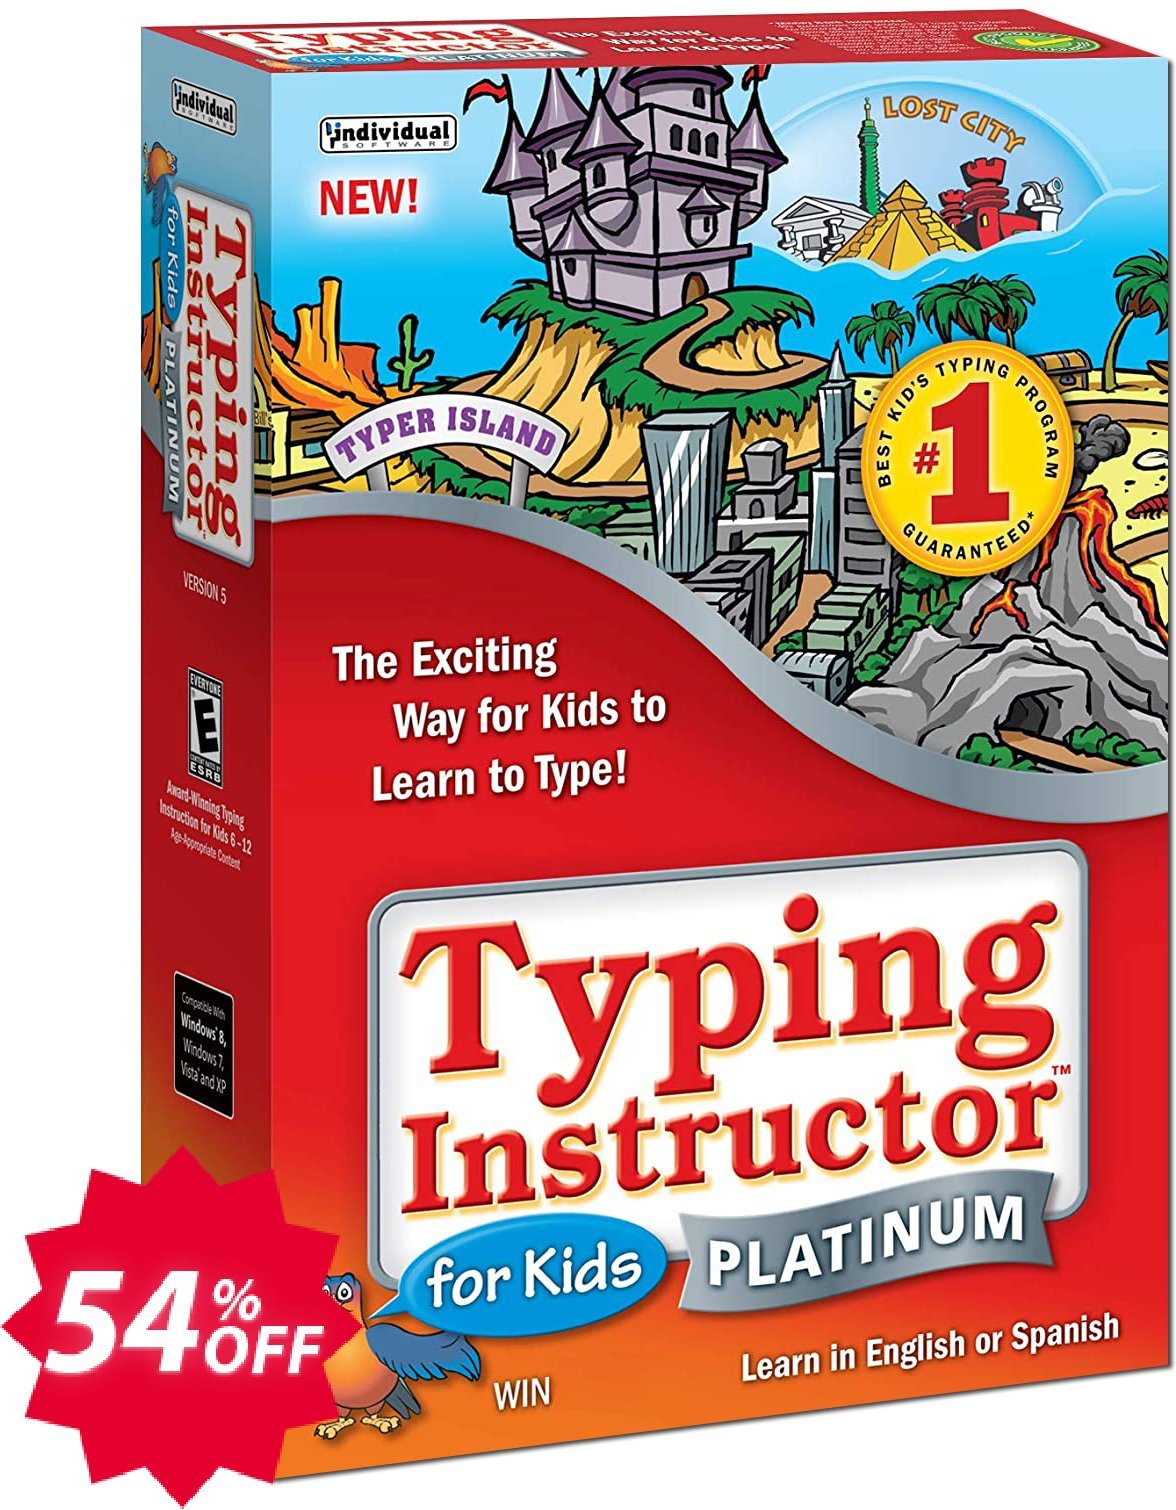 Typing Instructor for Kids Platinum - International Version UK Keyboard Coupon code 54% discount 